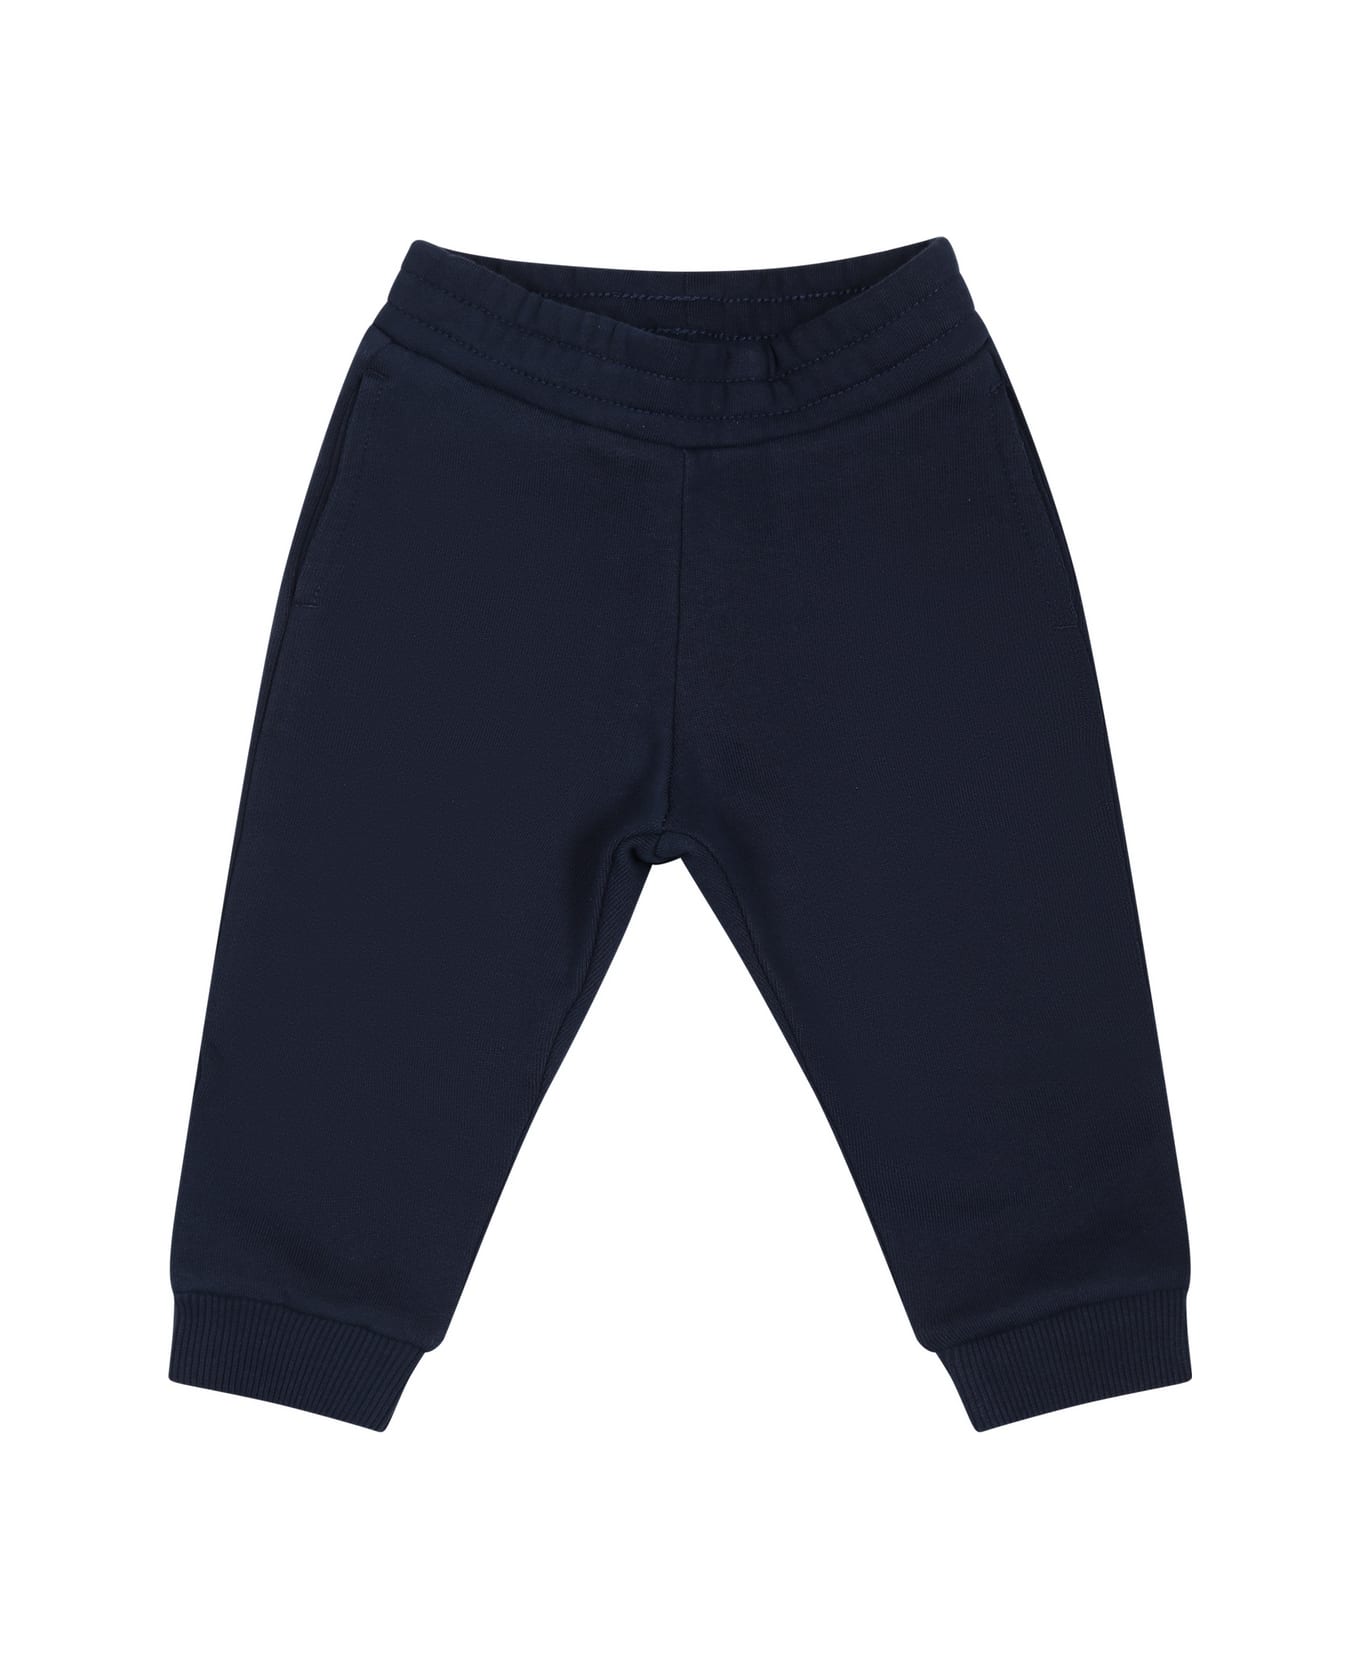 Kenzo Kids Blue Trousers For Baby Boy - Blue